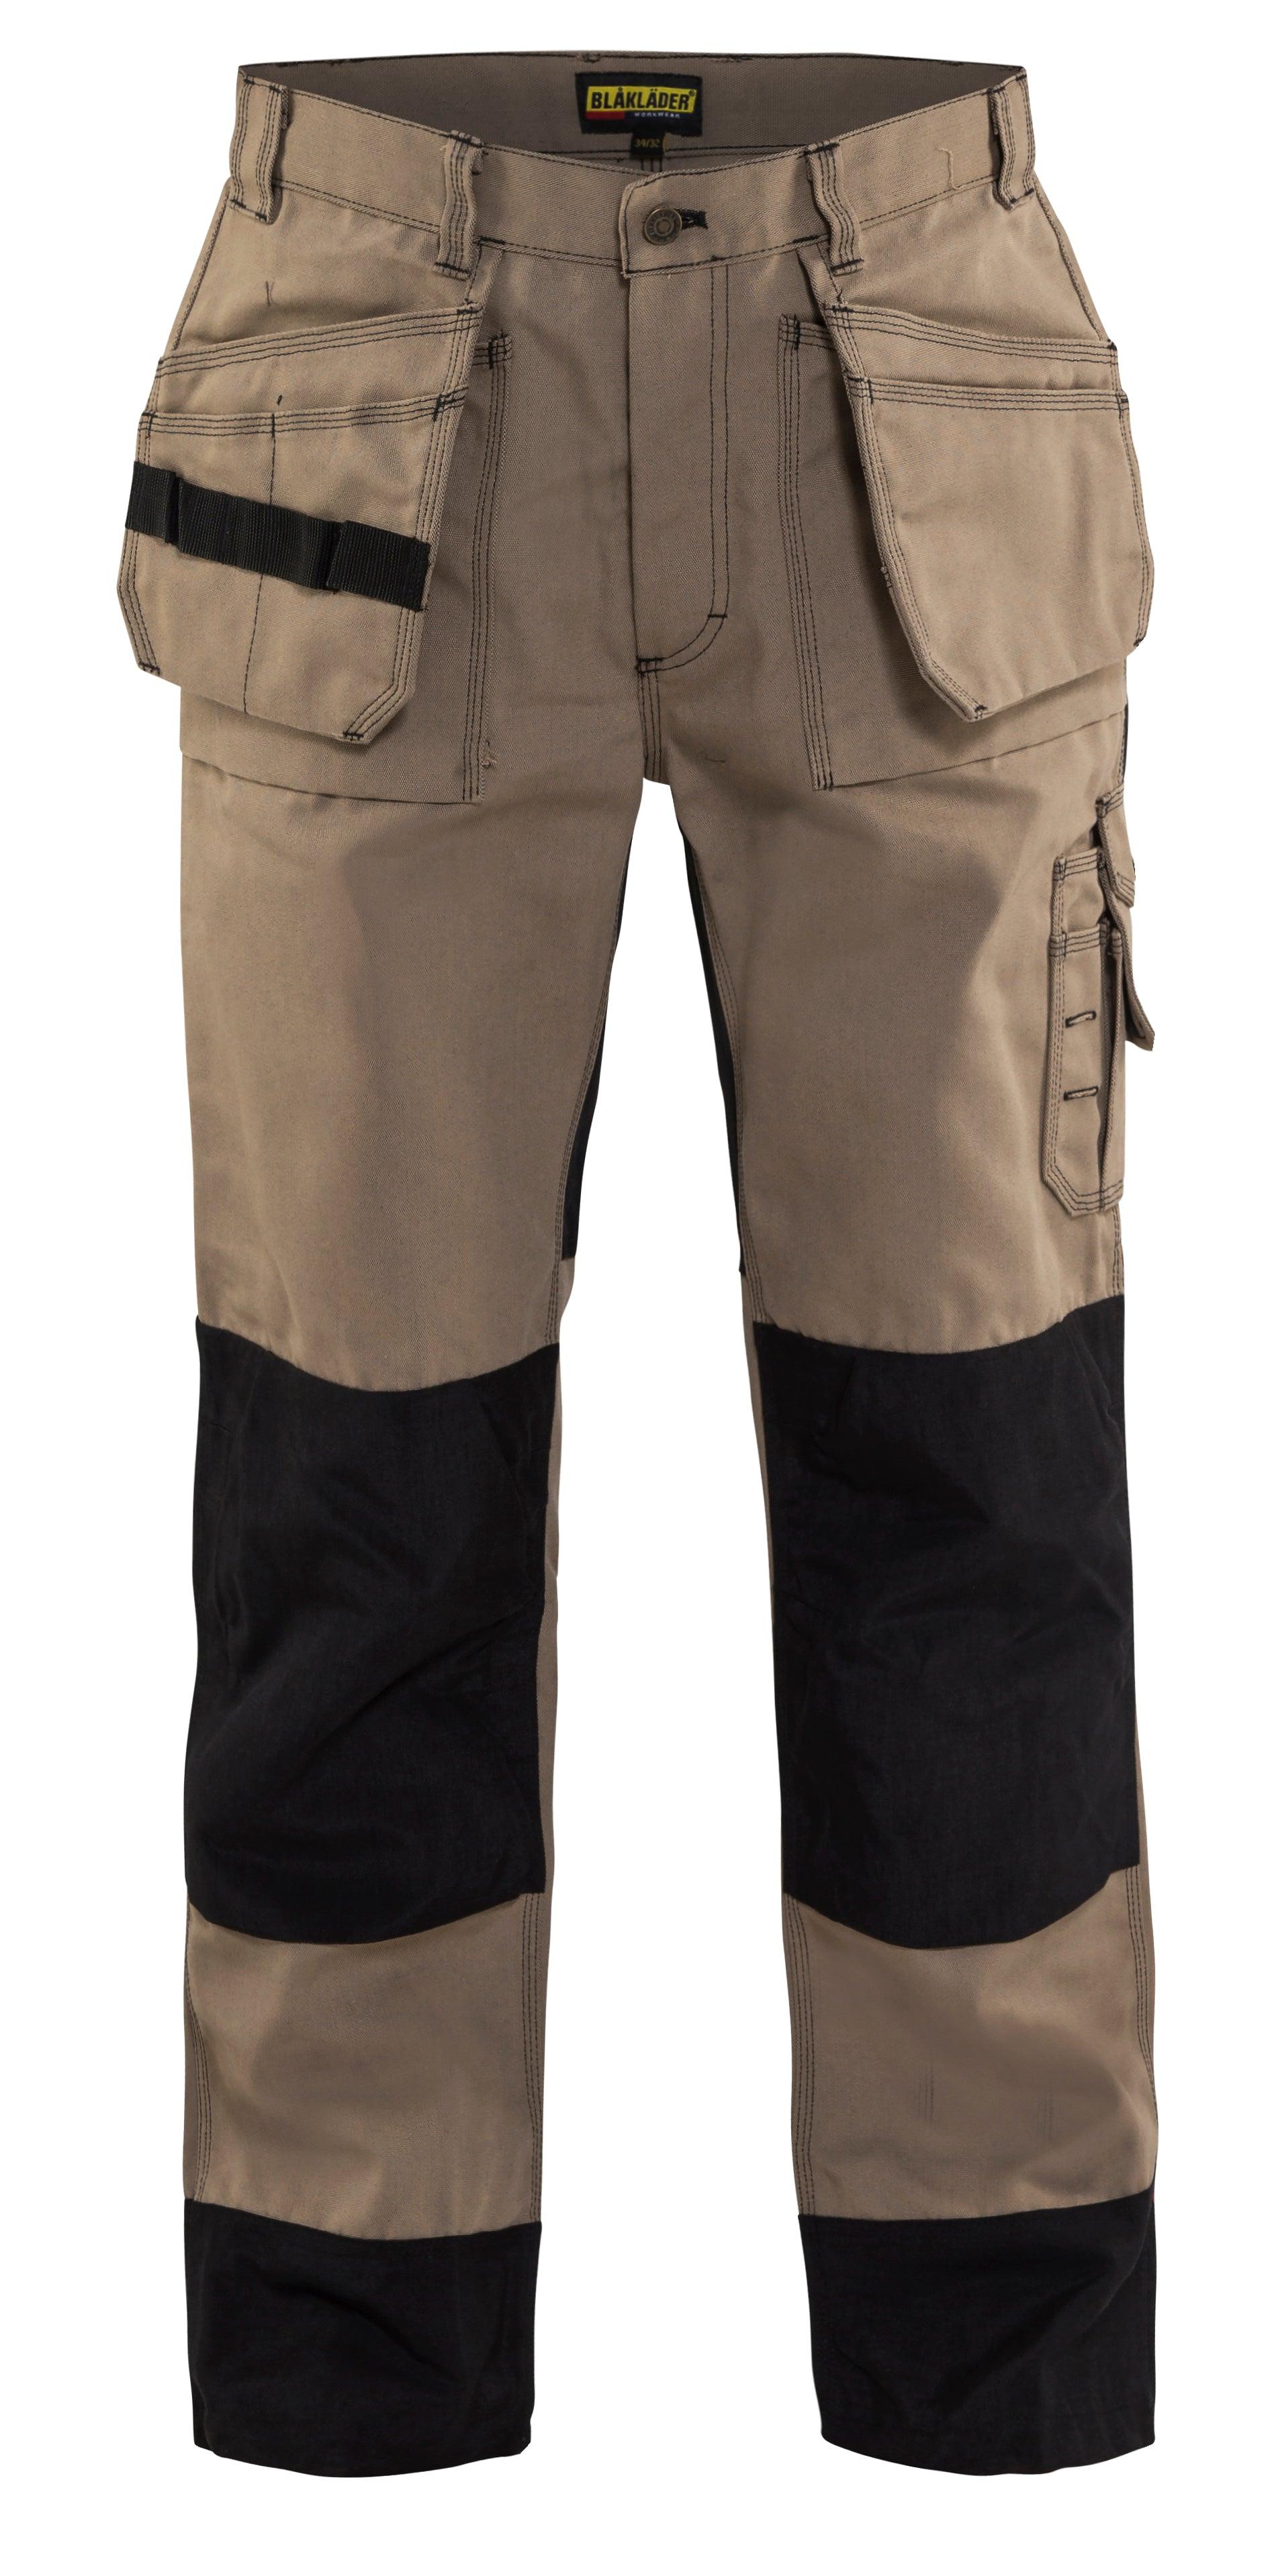 Blaklader 1680 10oz Canvas Heavy Worker Pants - Khaki/Black - Trusted Gear Company LLC